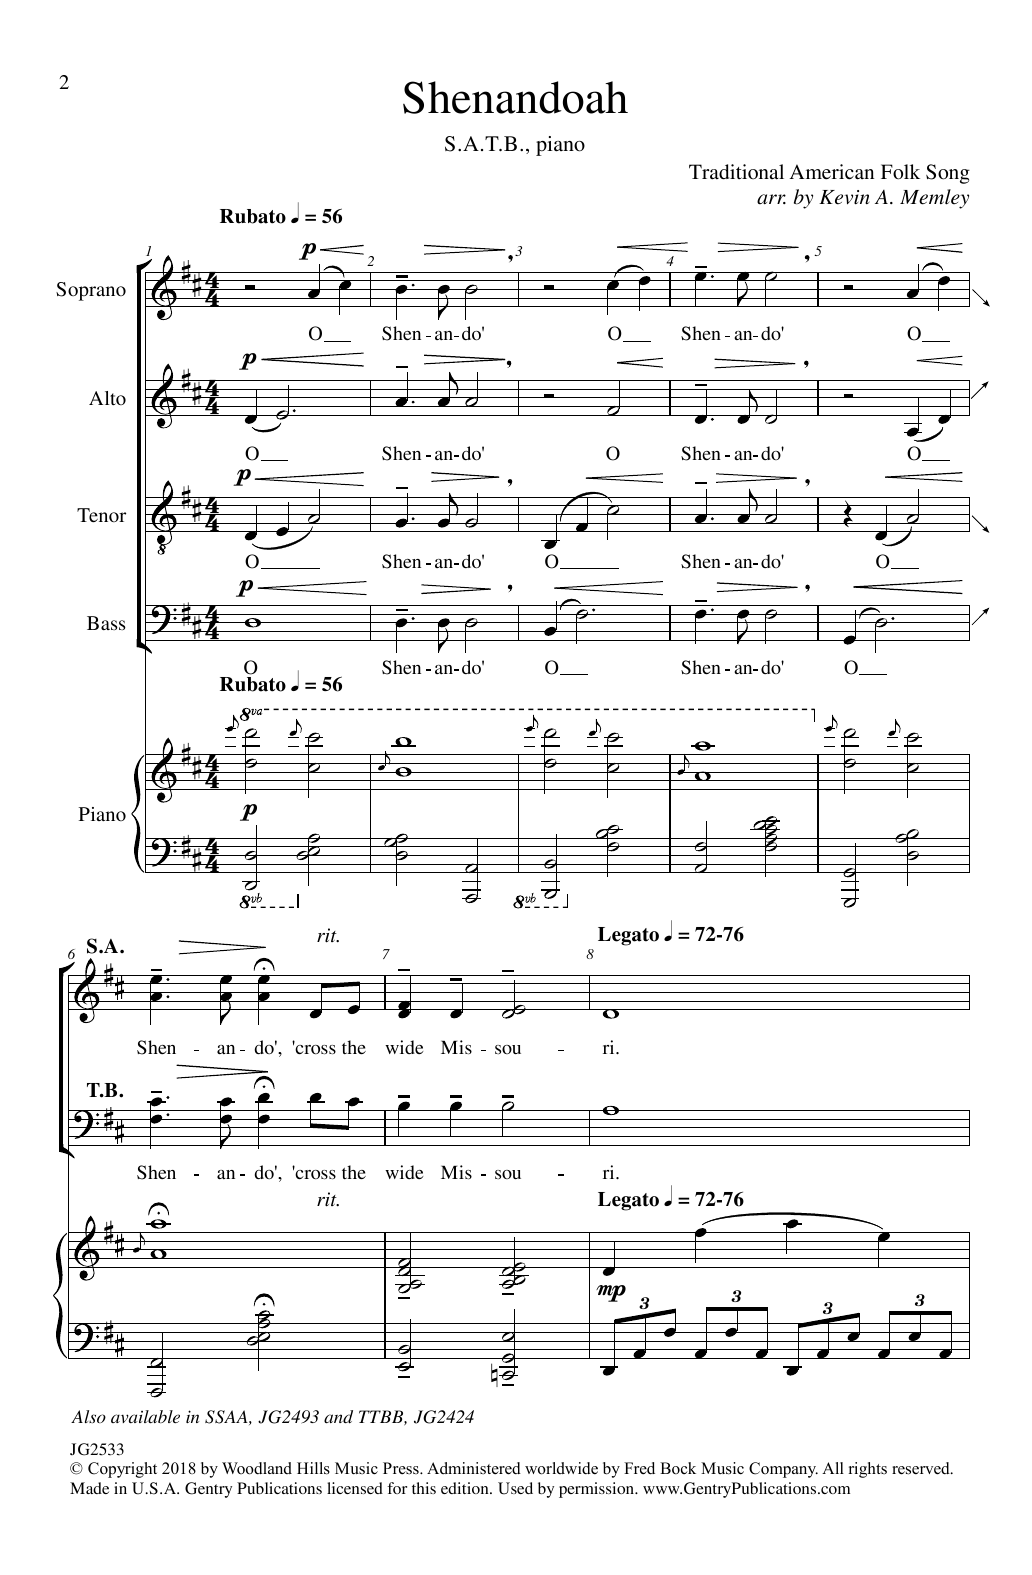 Traditional American Folk Song Shenandoah Arr Kevin A Memley Sheet Music Notes Download 2808